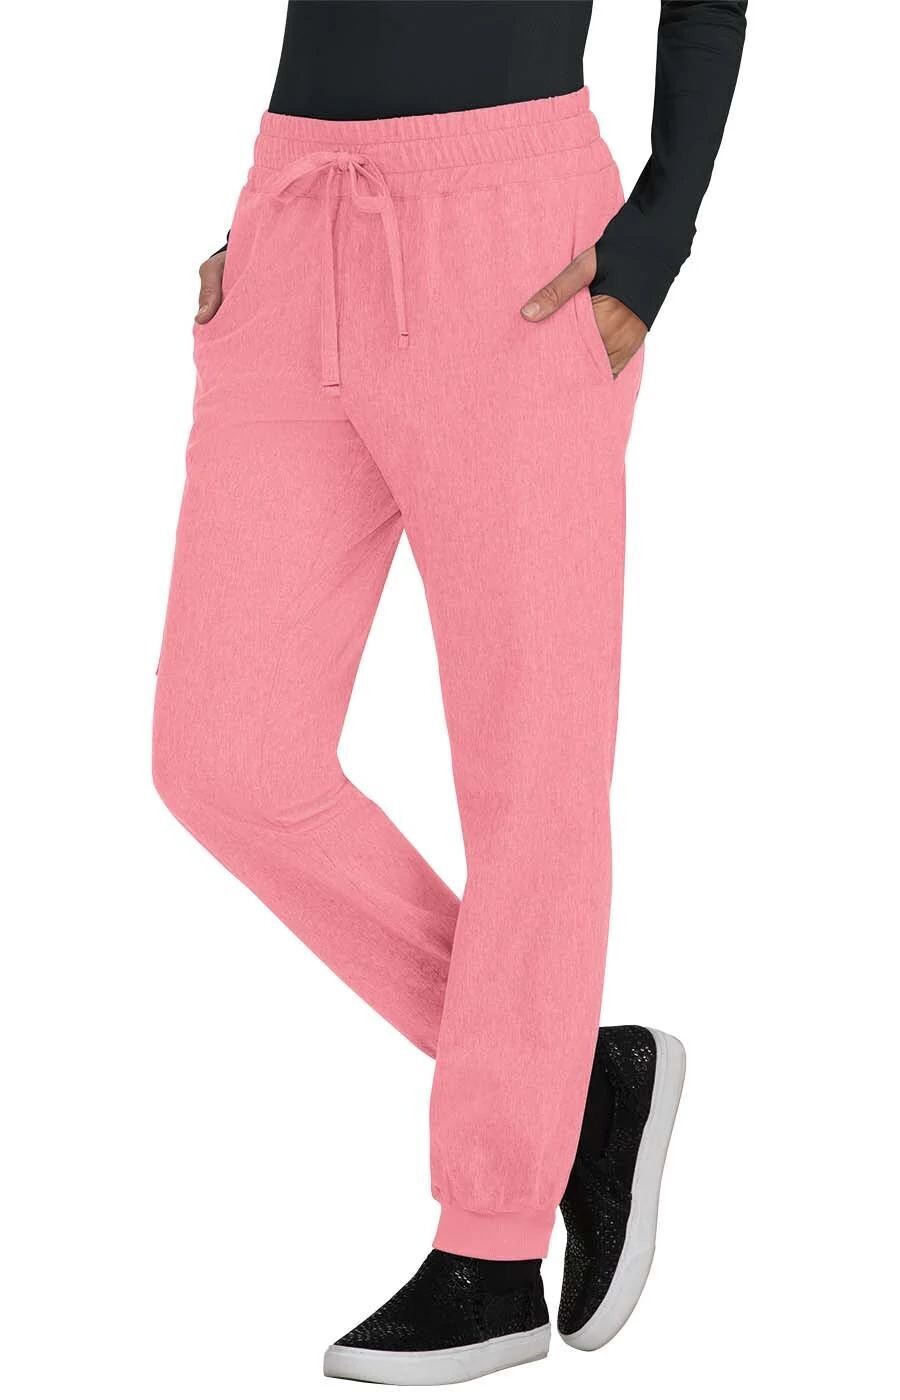 Pantalone KOI BASIC GEMMA JOGGER Donna Colore 140. Soft Pink